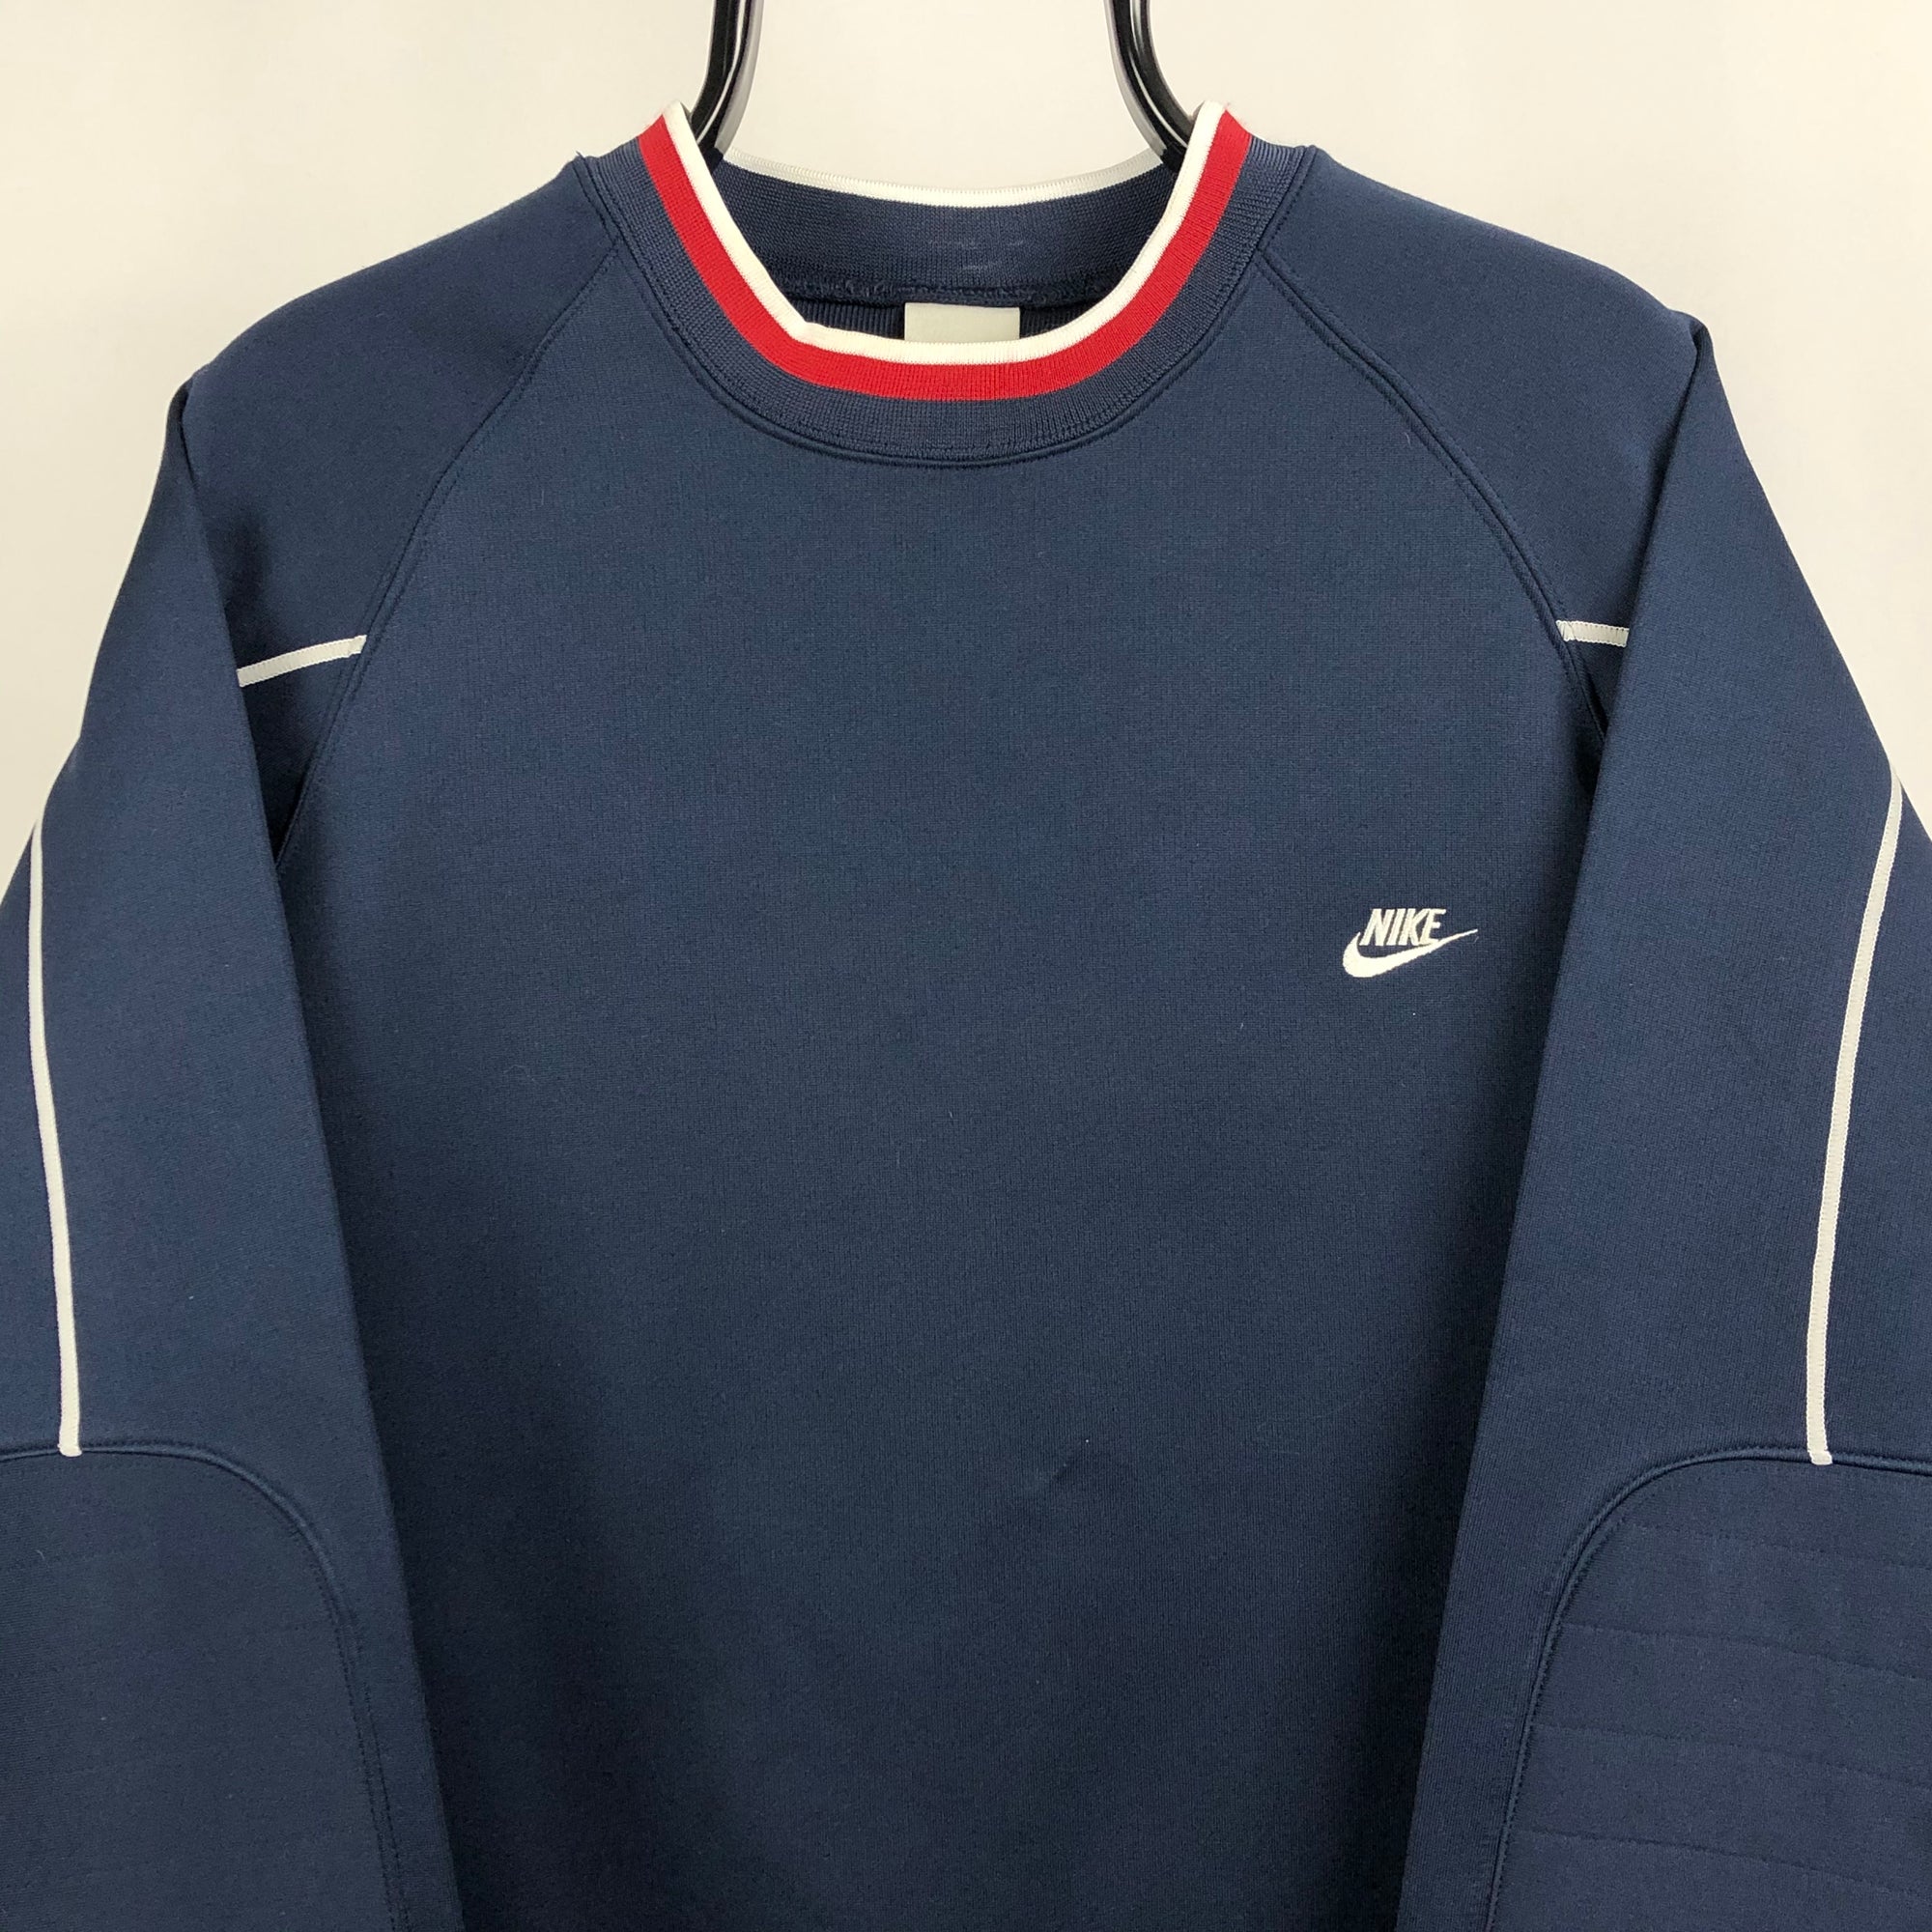 Vintage Nike Nylon Sweatshirt in Navy/Red/White - Men's Small/Women's Medium